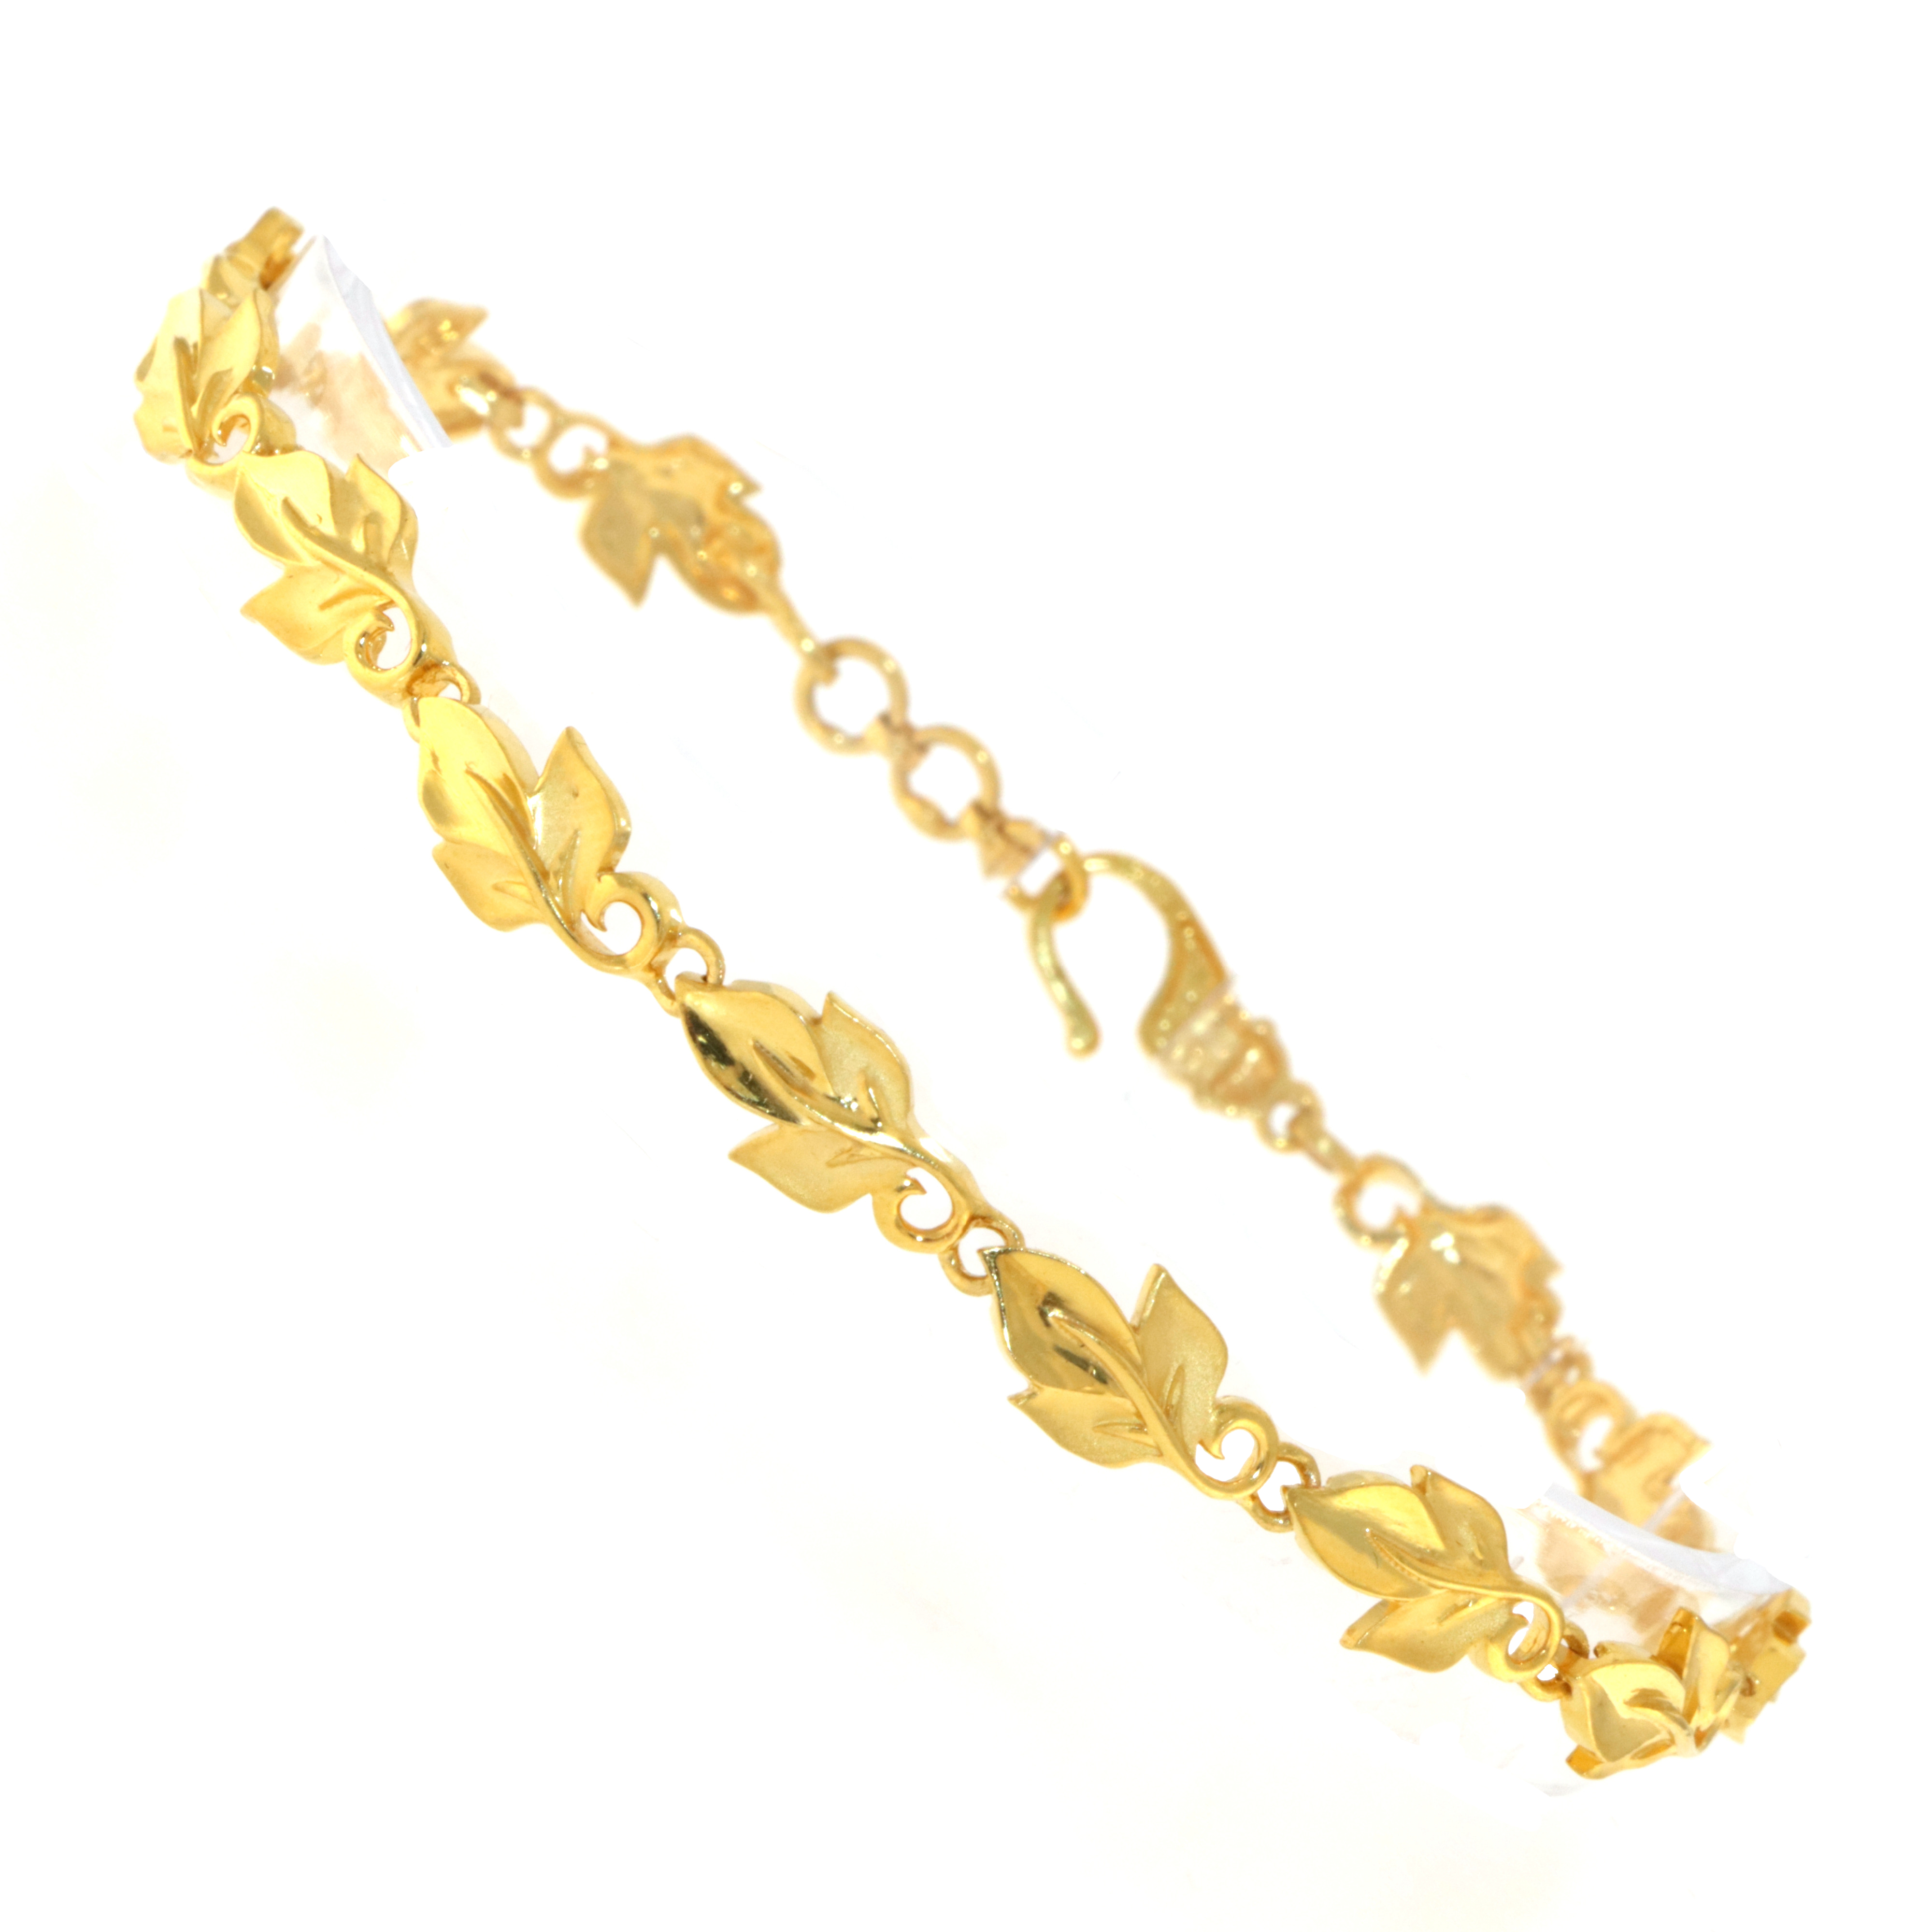 22ct Real Gold Asian/Indian/Pakistani Style Leaf Bracelet